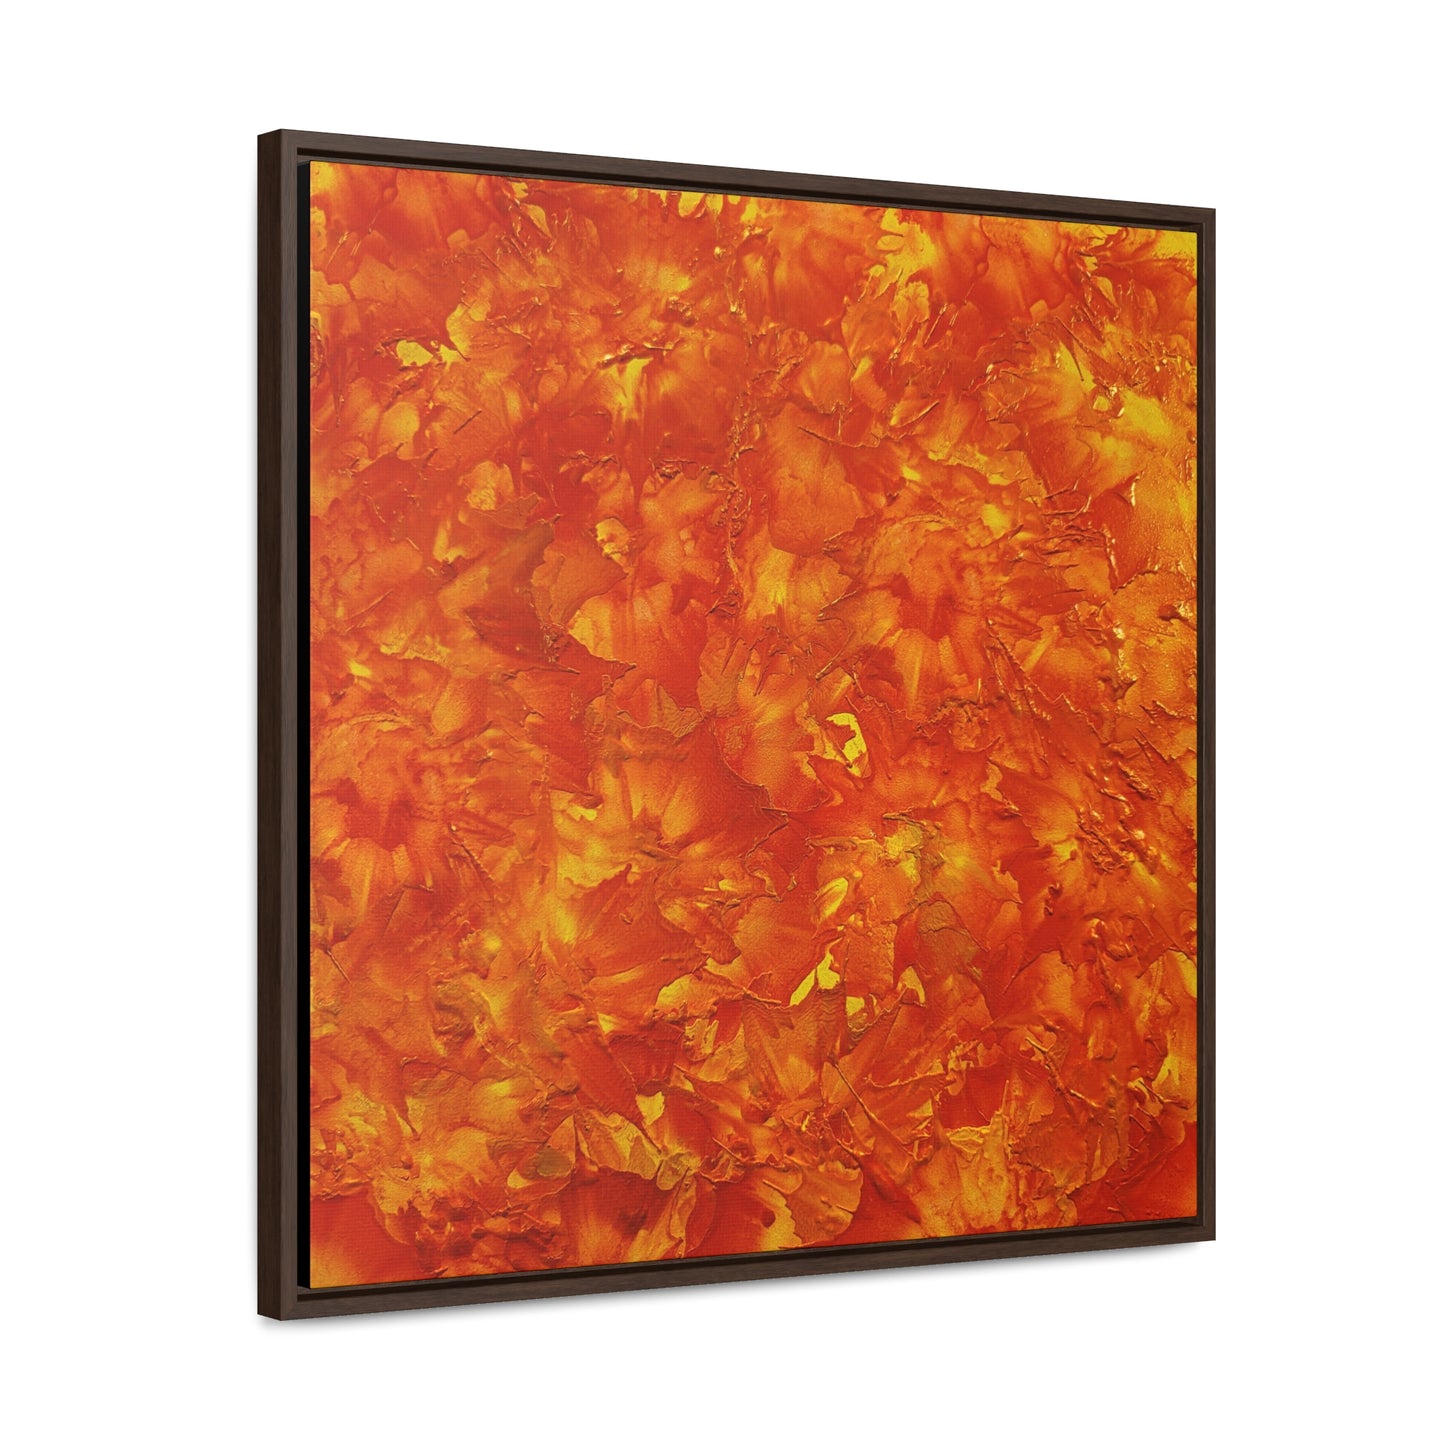 Framed Square Canvas Prints - The Phoenix